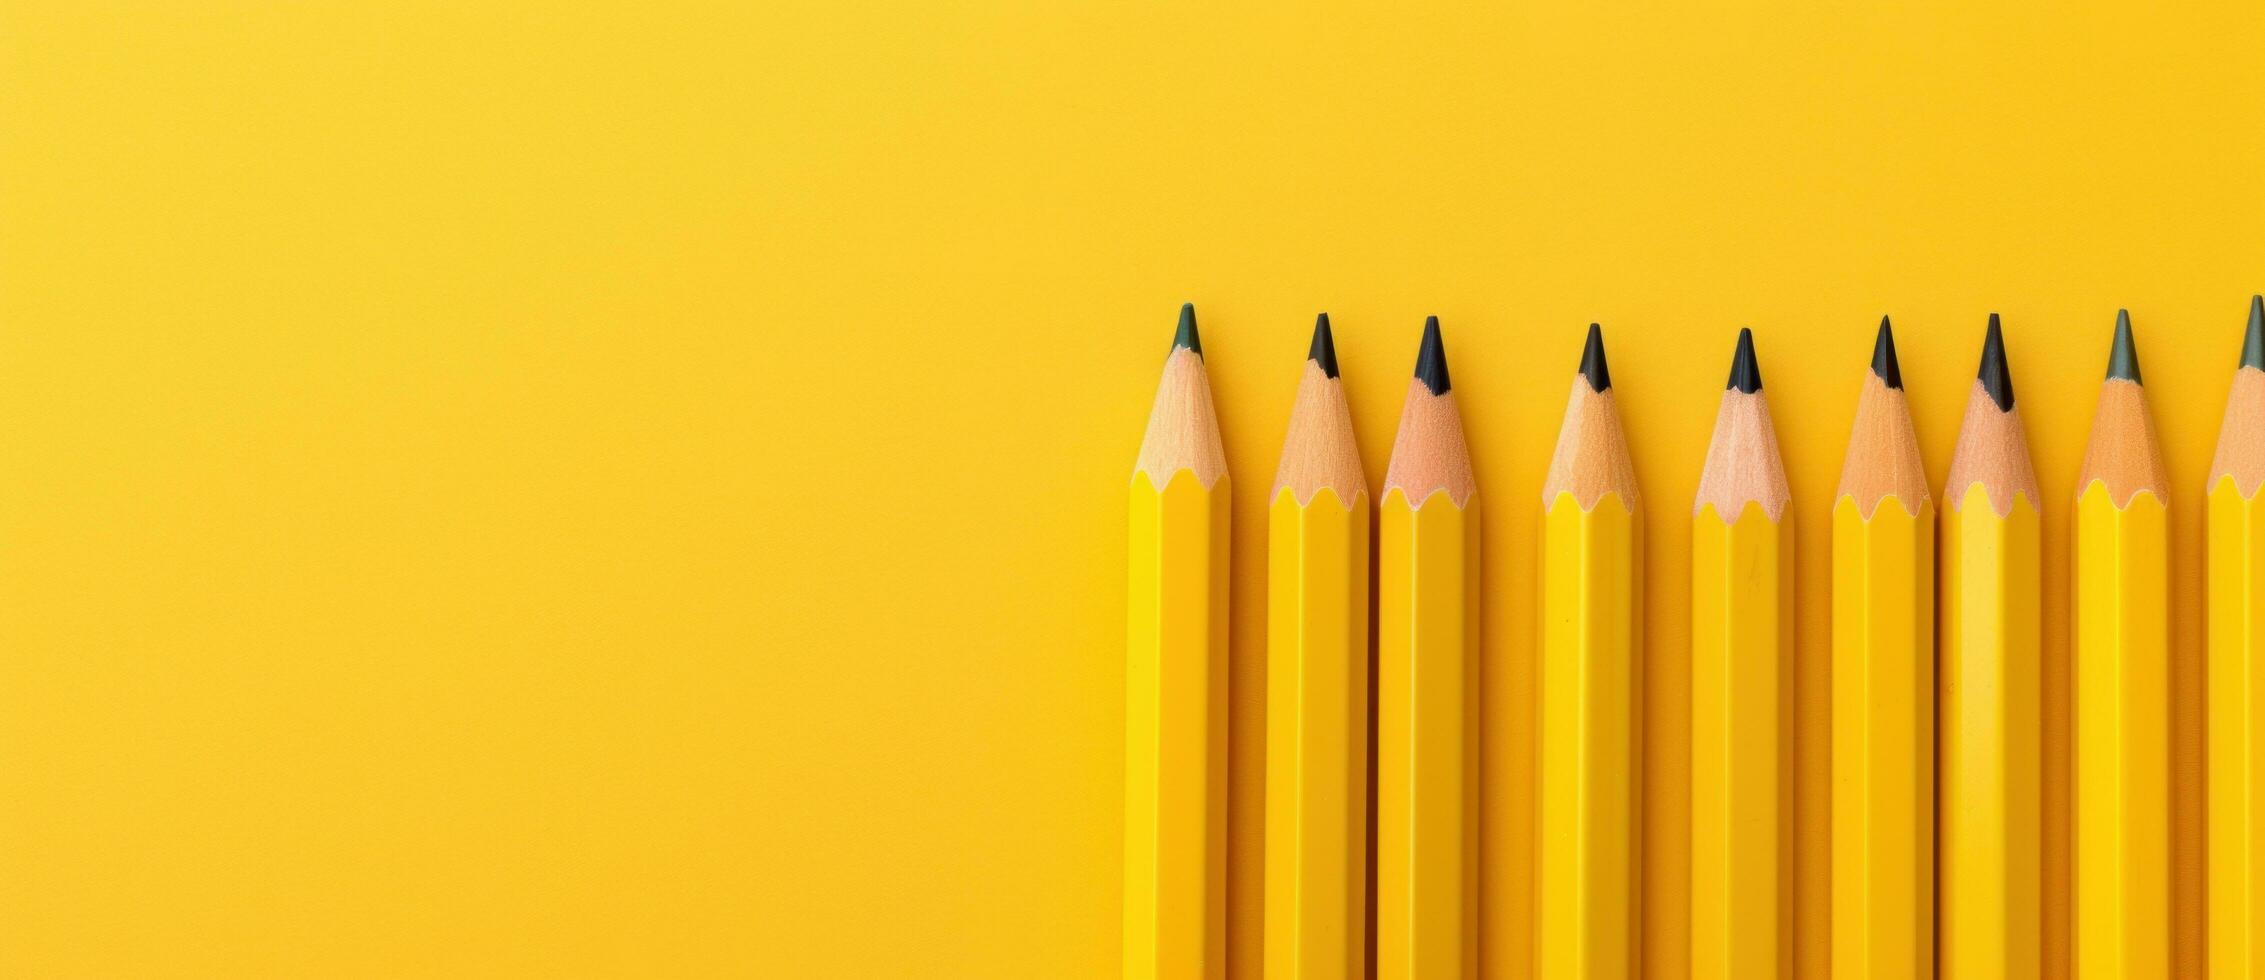 Yellow pencils background photo